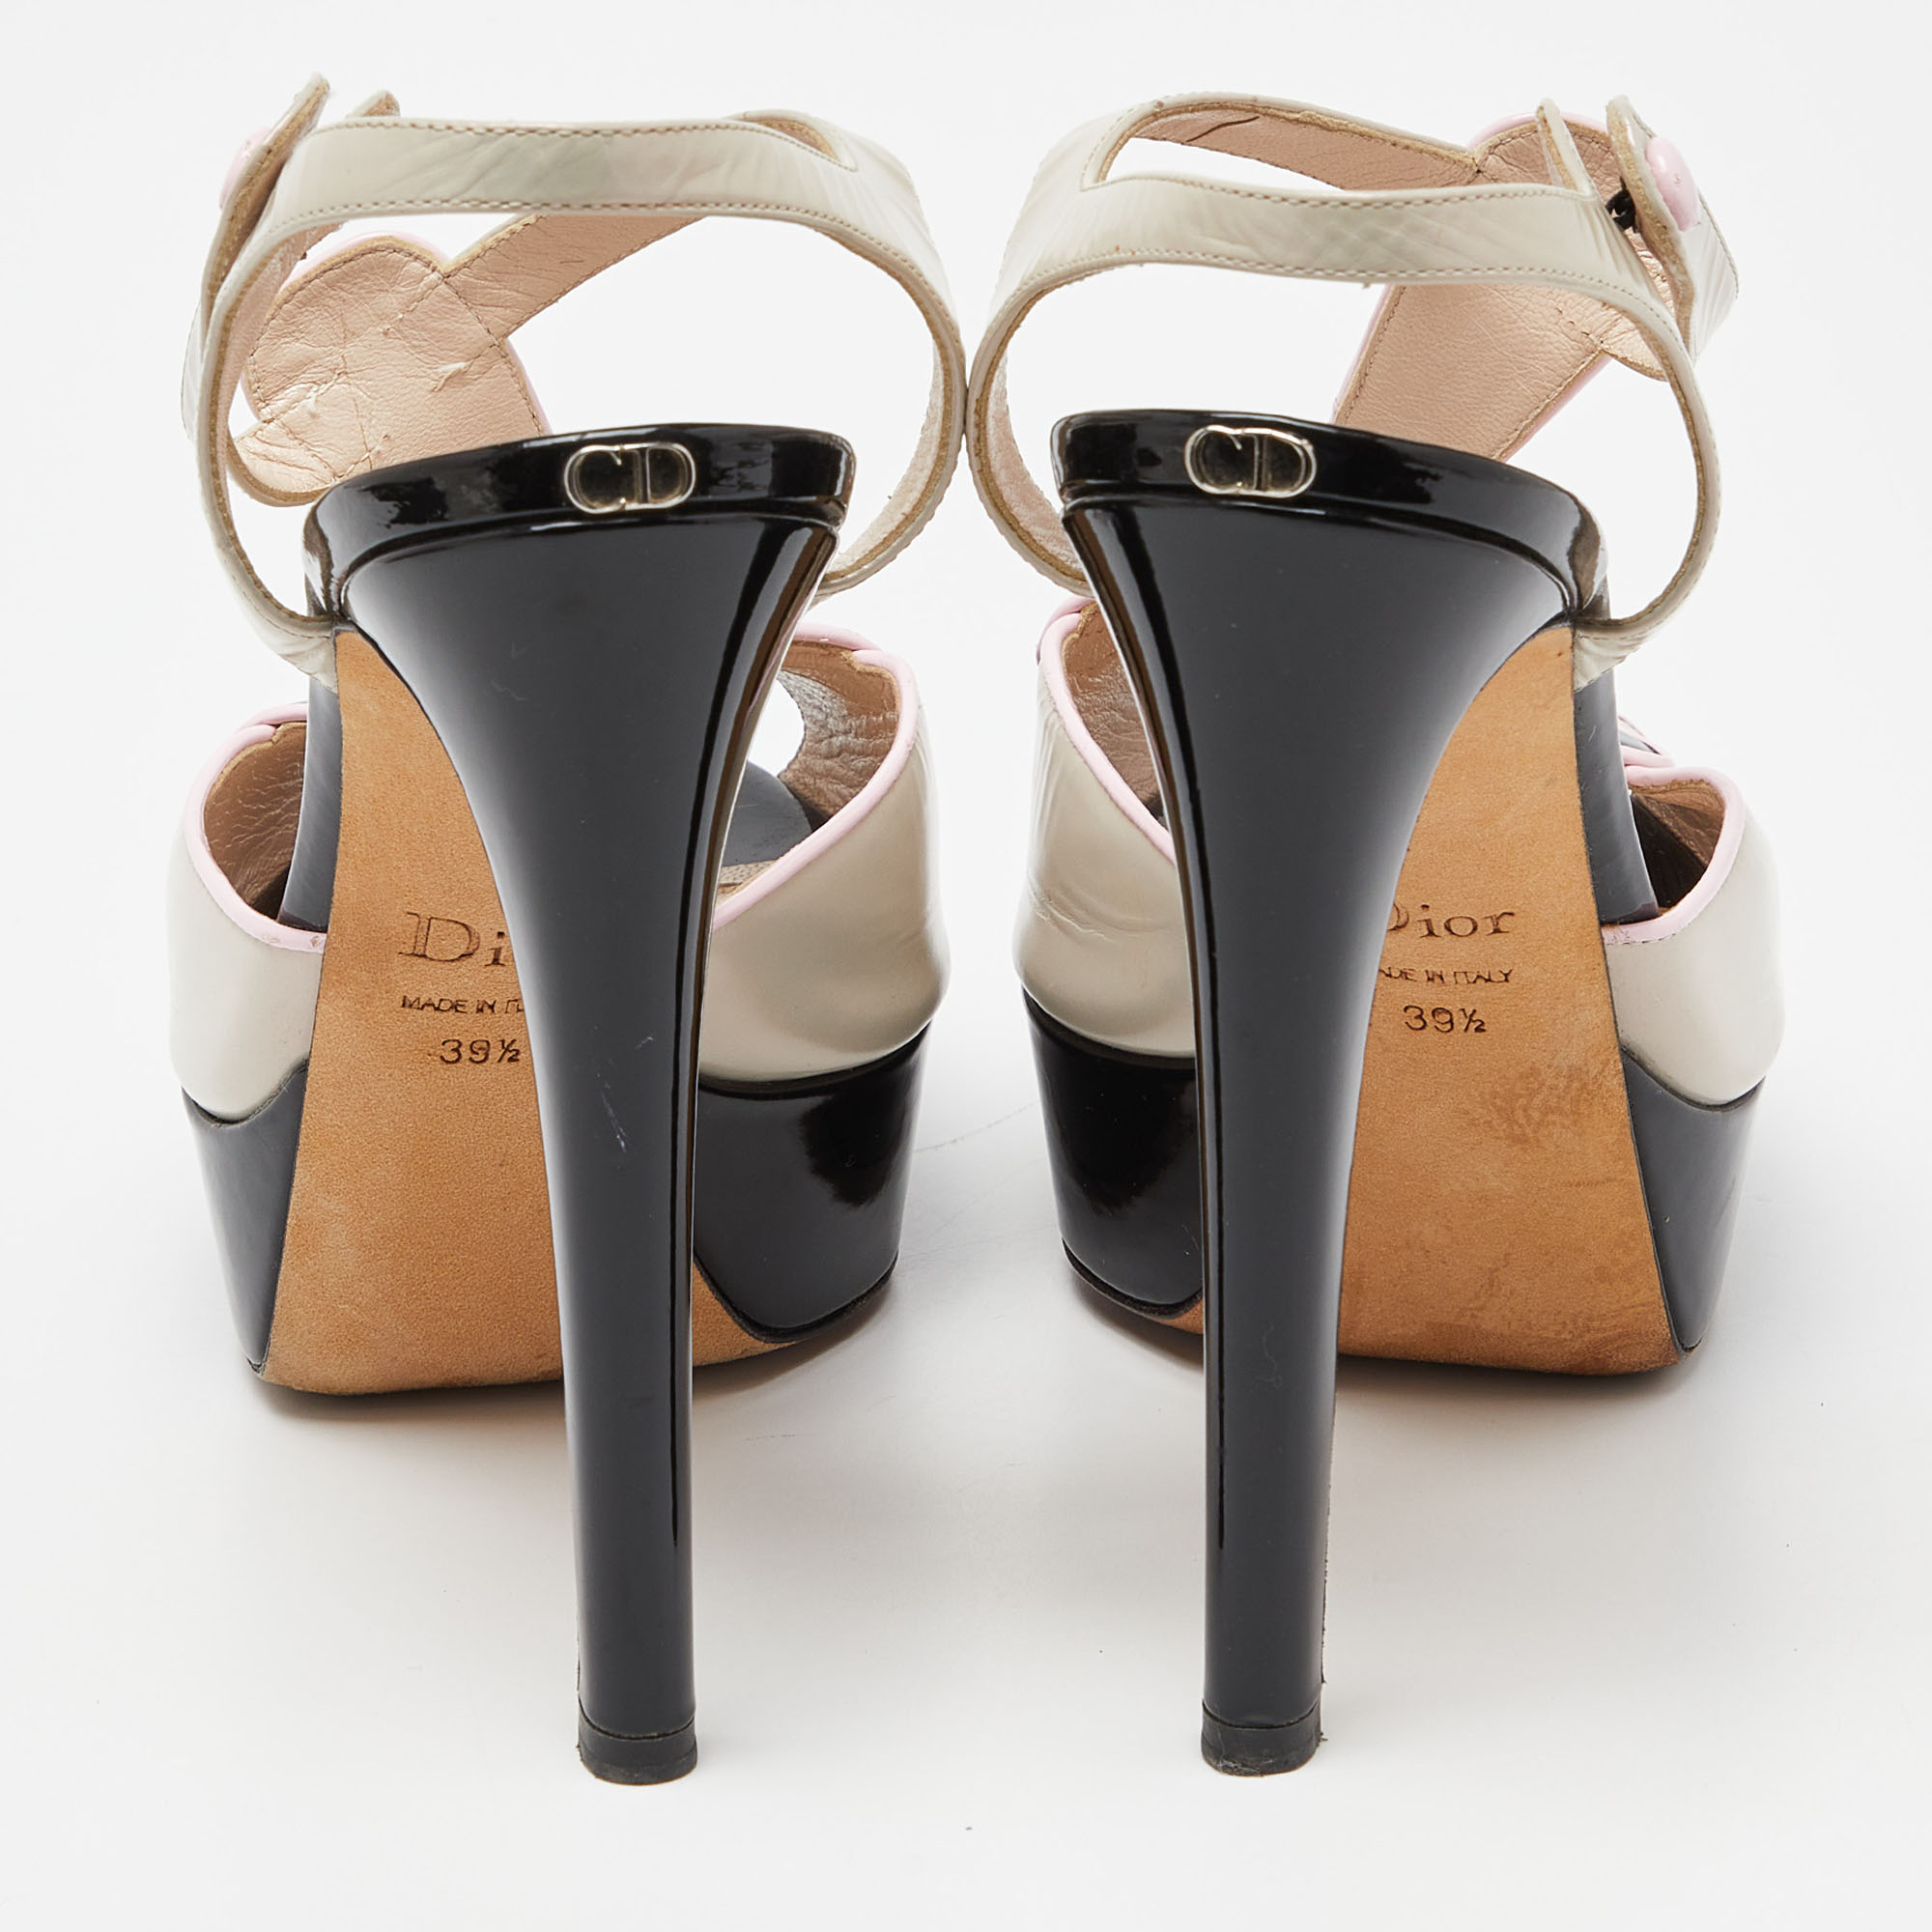 Dior Tri Color Patent Leather Platform Ankle Strap Sandals Size 39.5